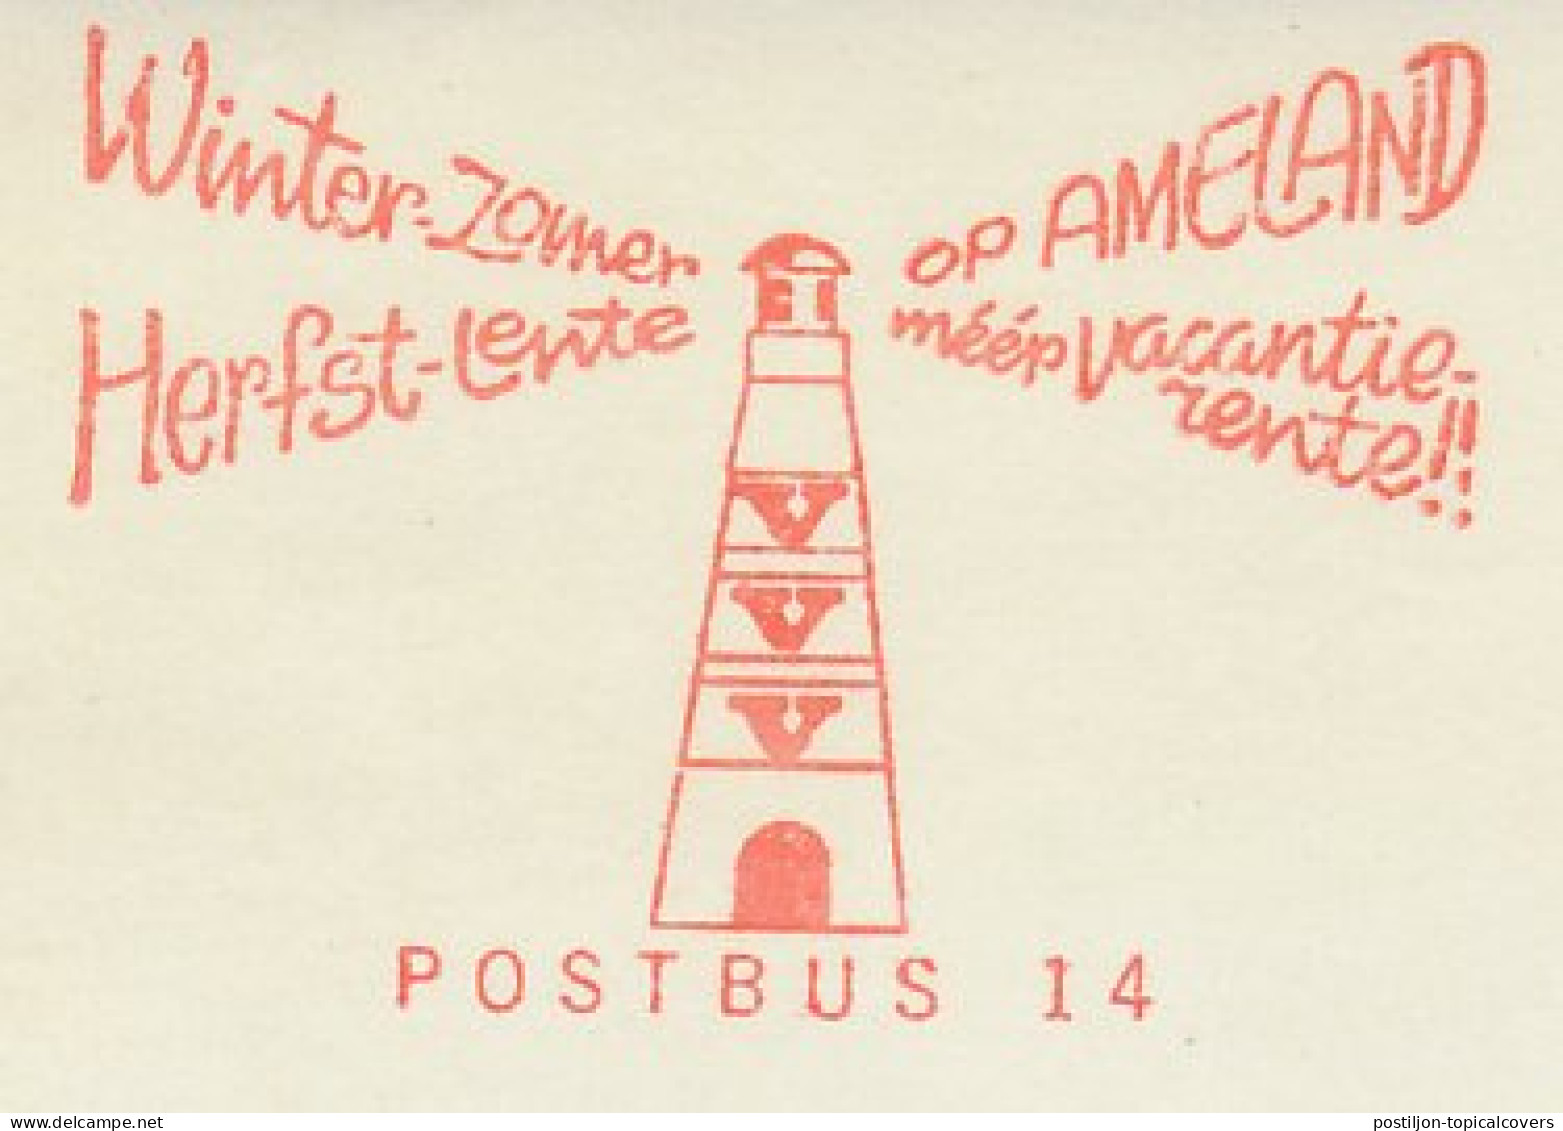 Meter Cut Netherlands 1974 Lighthouse Nes Op Ameland - Lighthouses